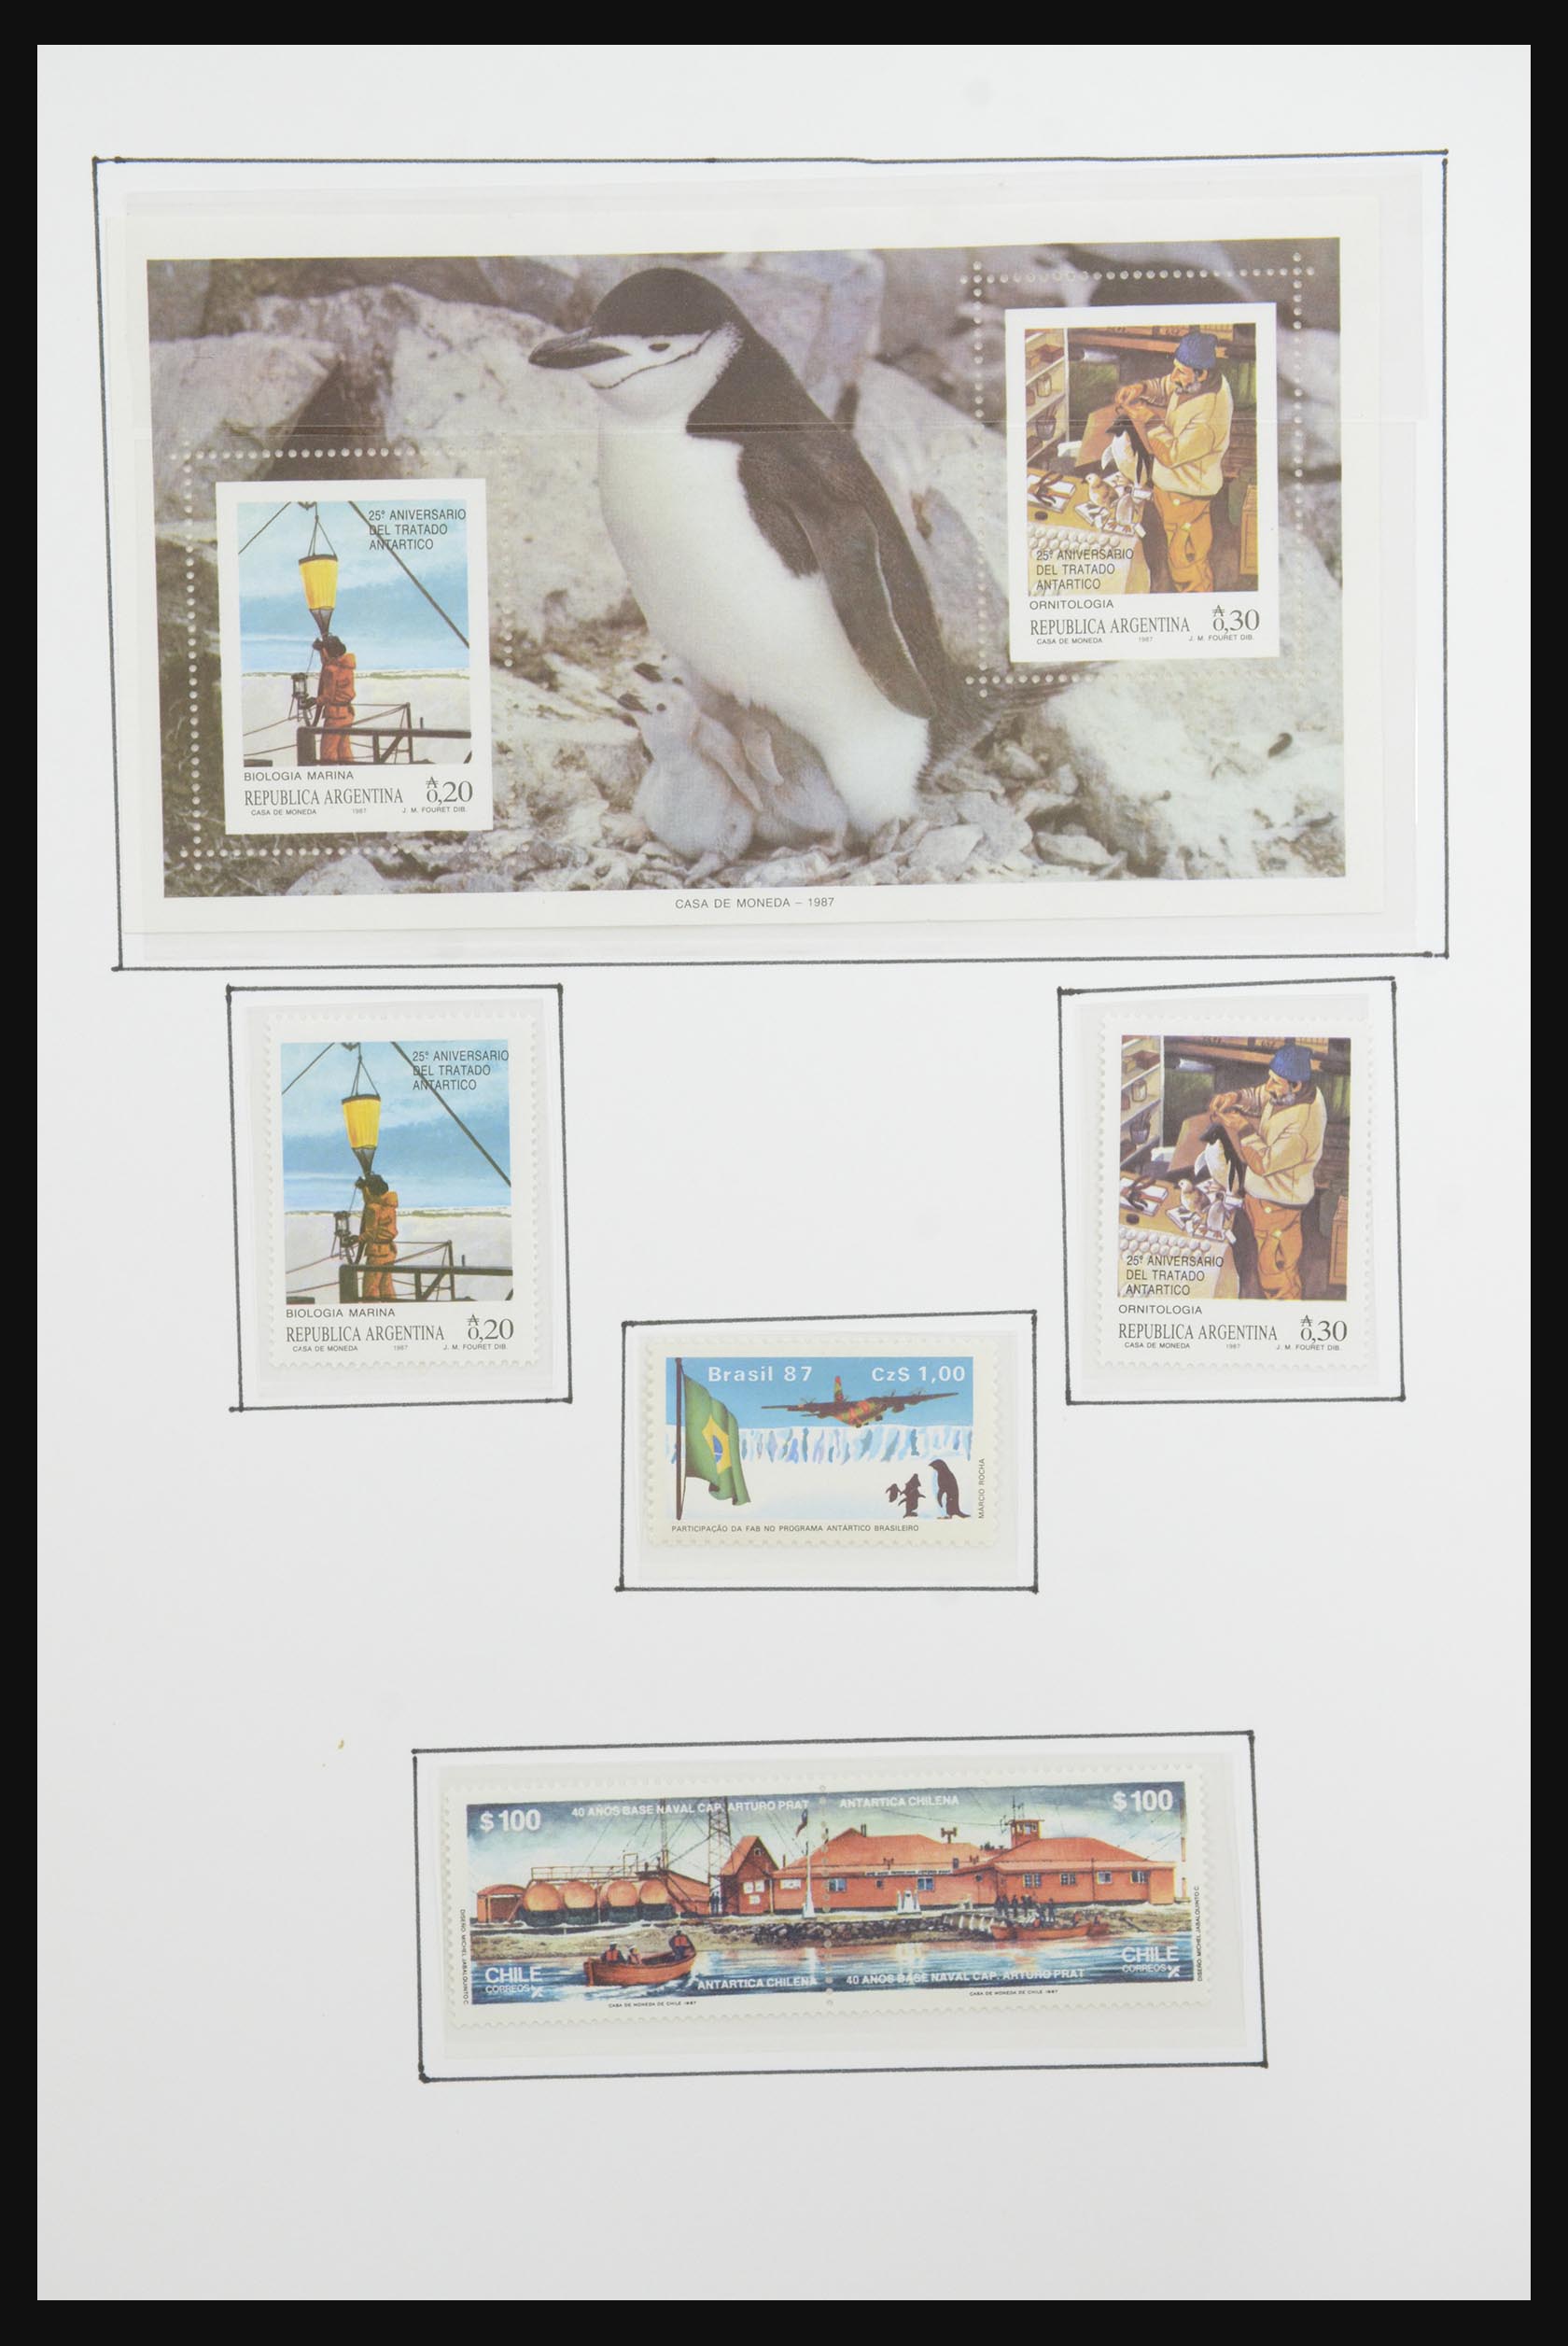 31659 020 - 31659 Motief: Antarctica en Arctica 1880-1998.